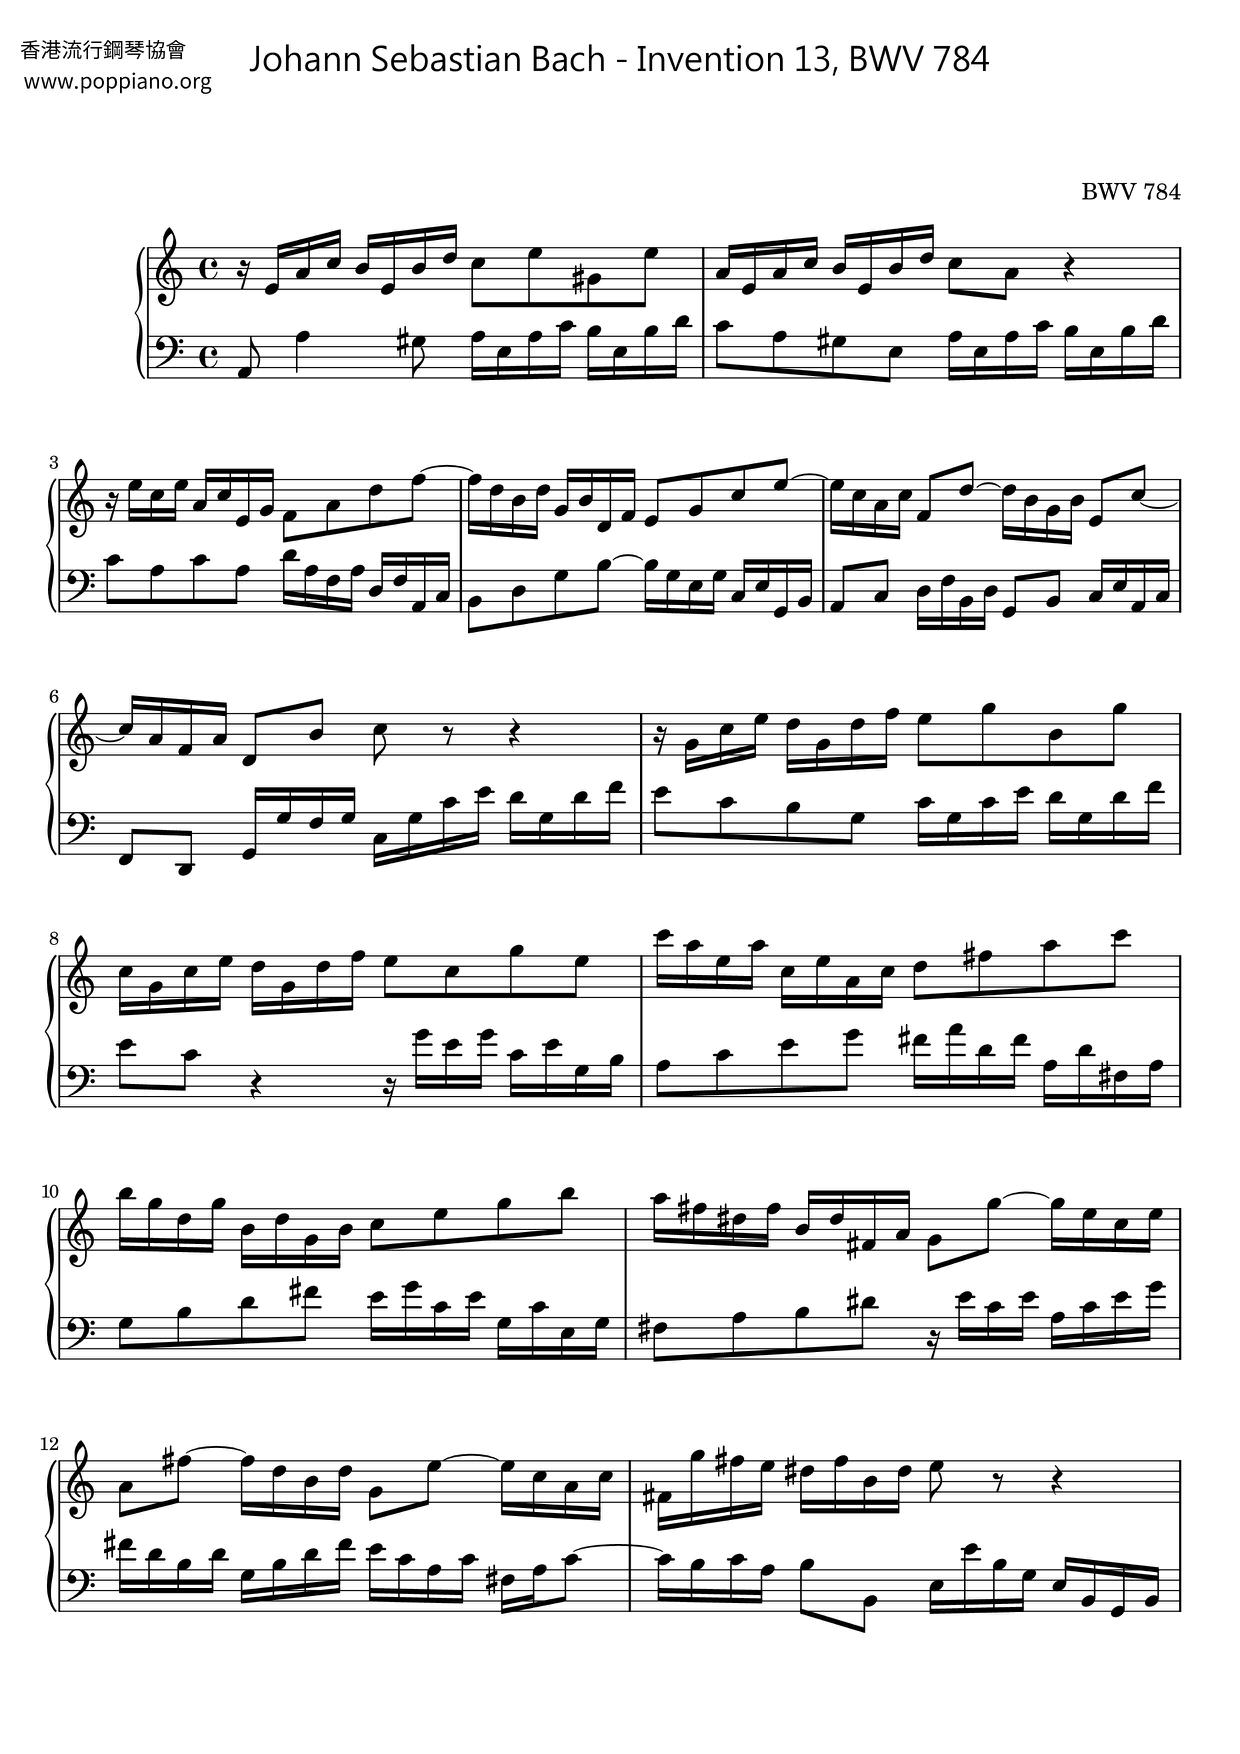 Invention 13, BWV 784 Score